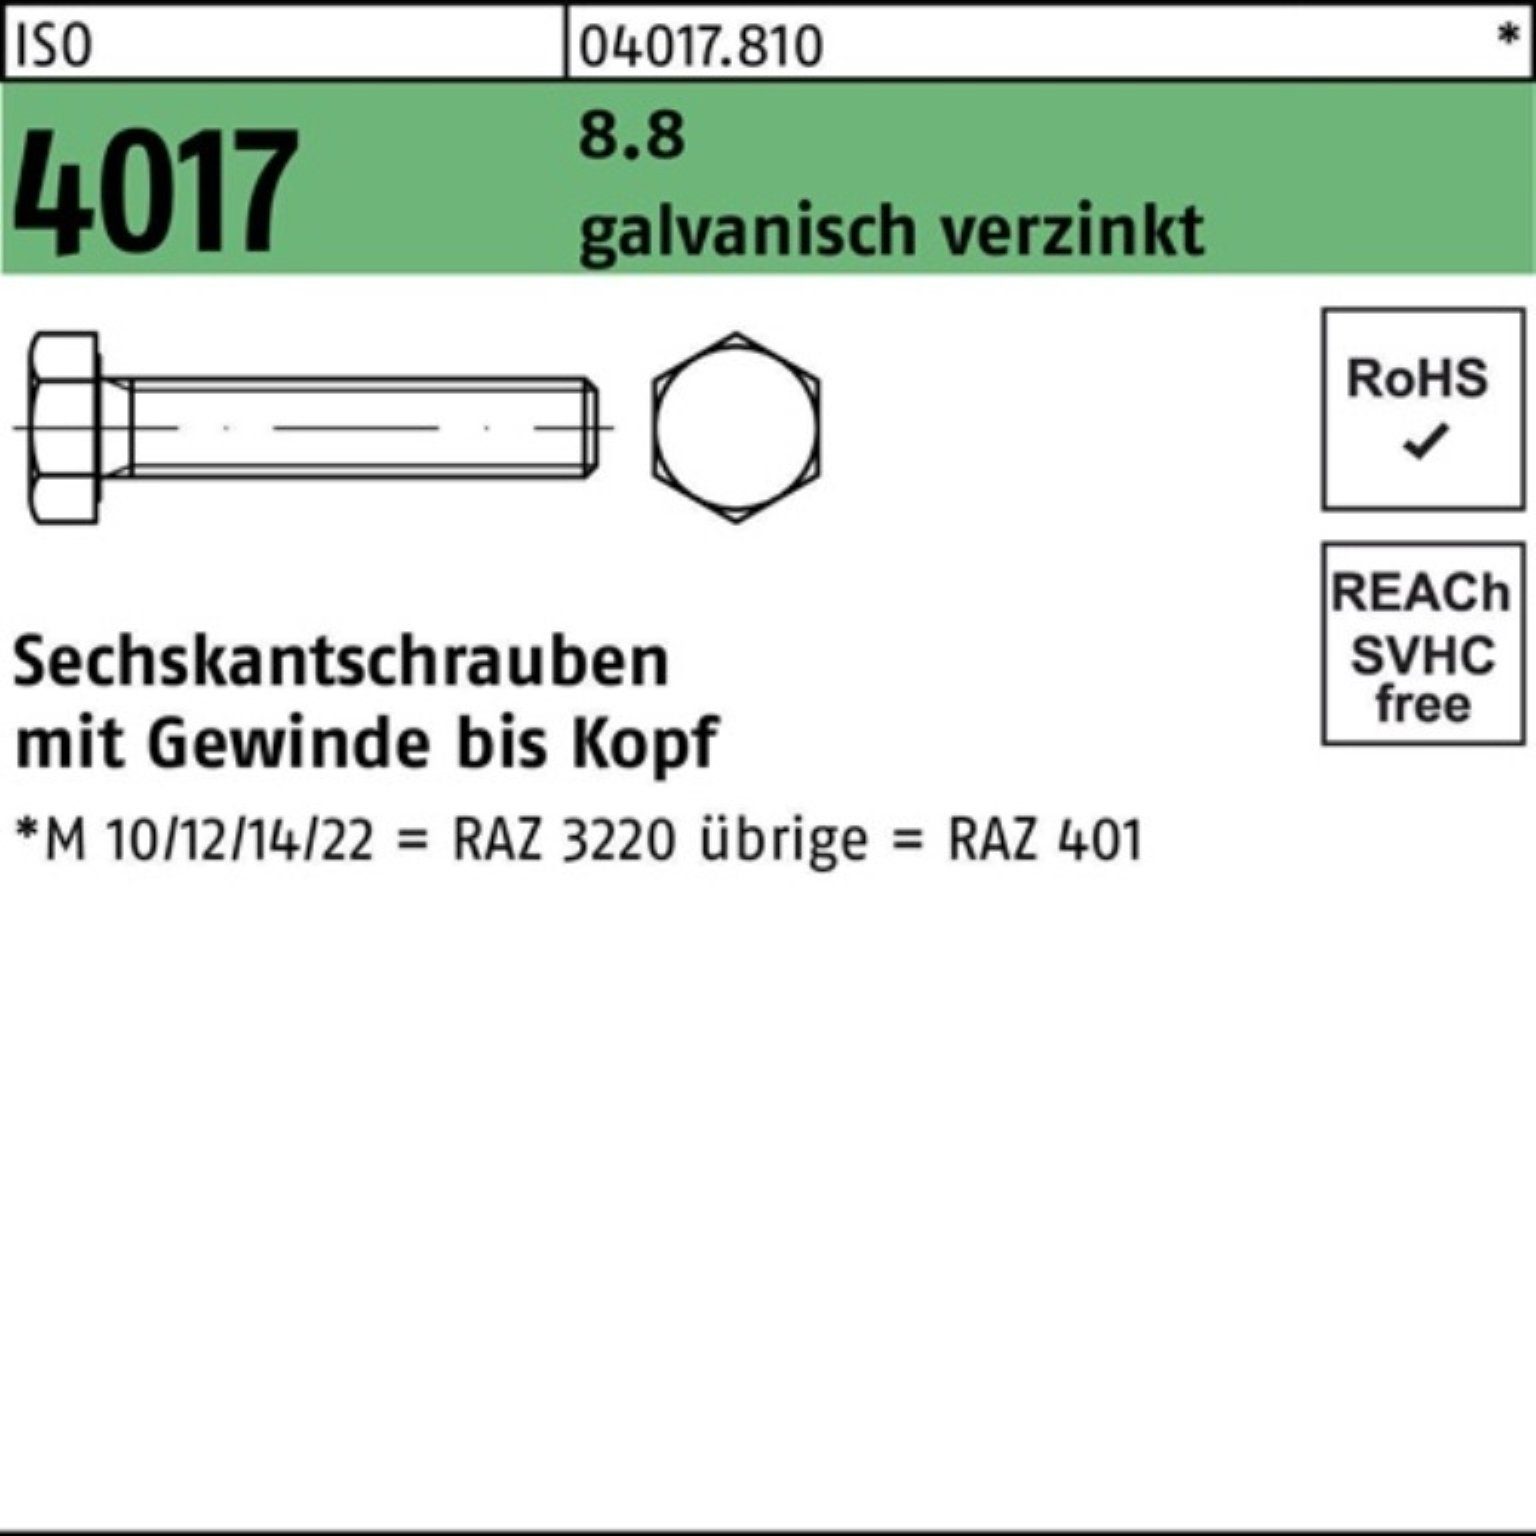 Bufab Sechskantschraube 200er Pack Sechskantschraube ISO 4017 VG M5x 100 8.8 galv.verz. 200 St